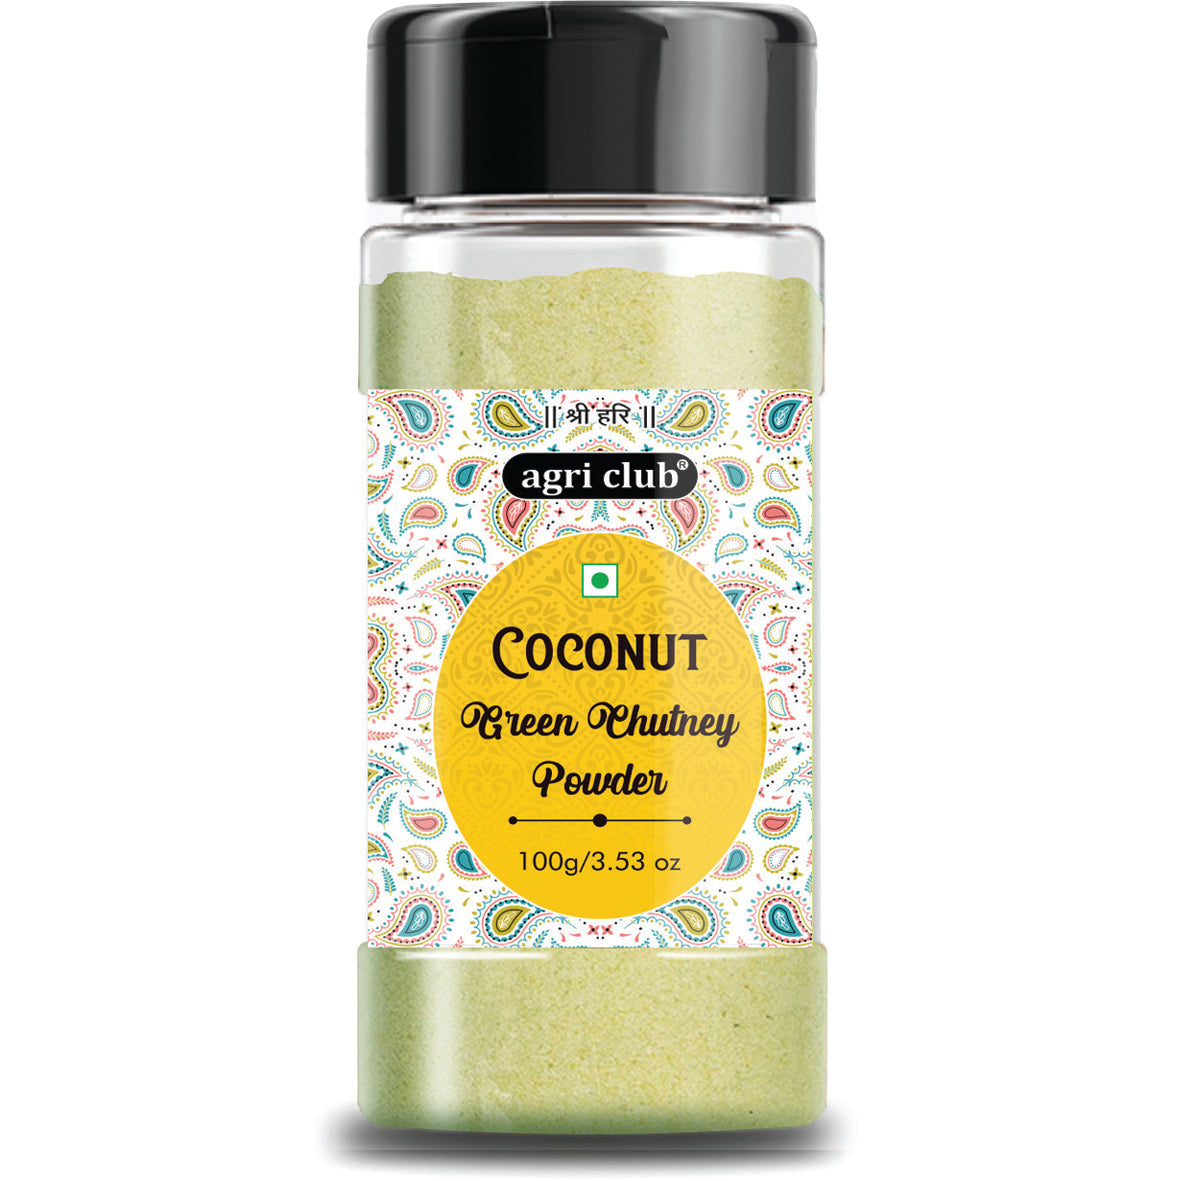 Coconut Green Chutney Powder 100% Natural